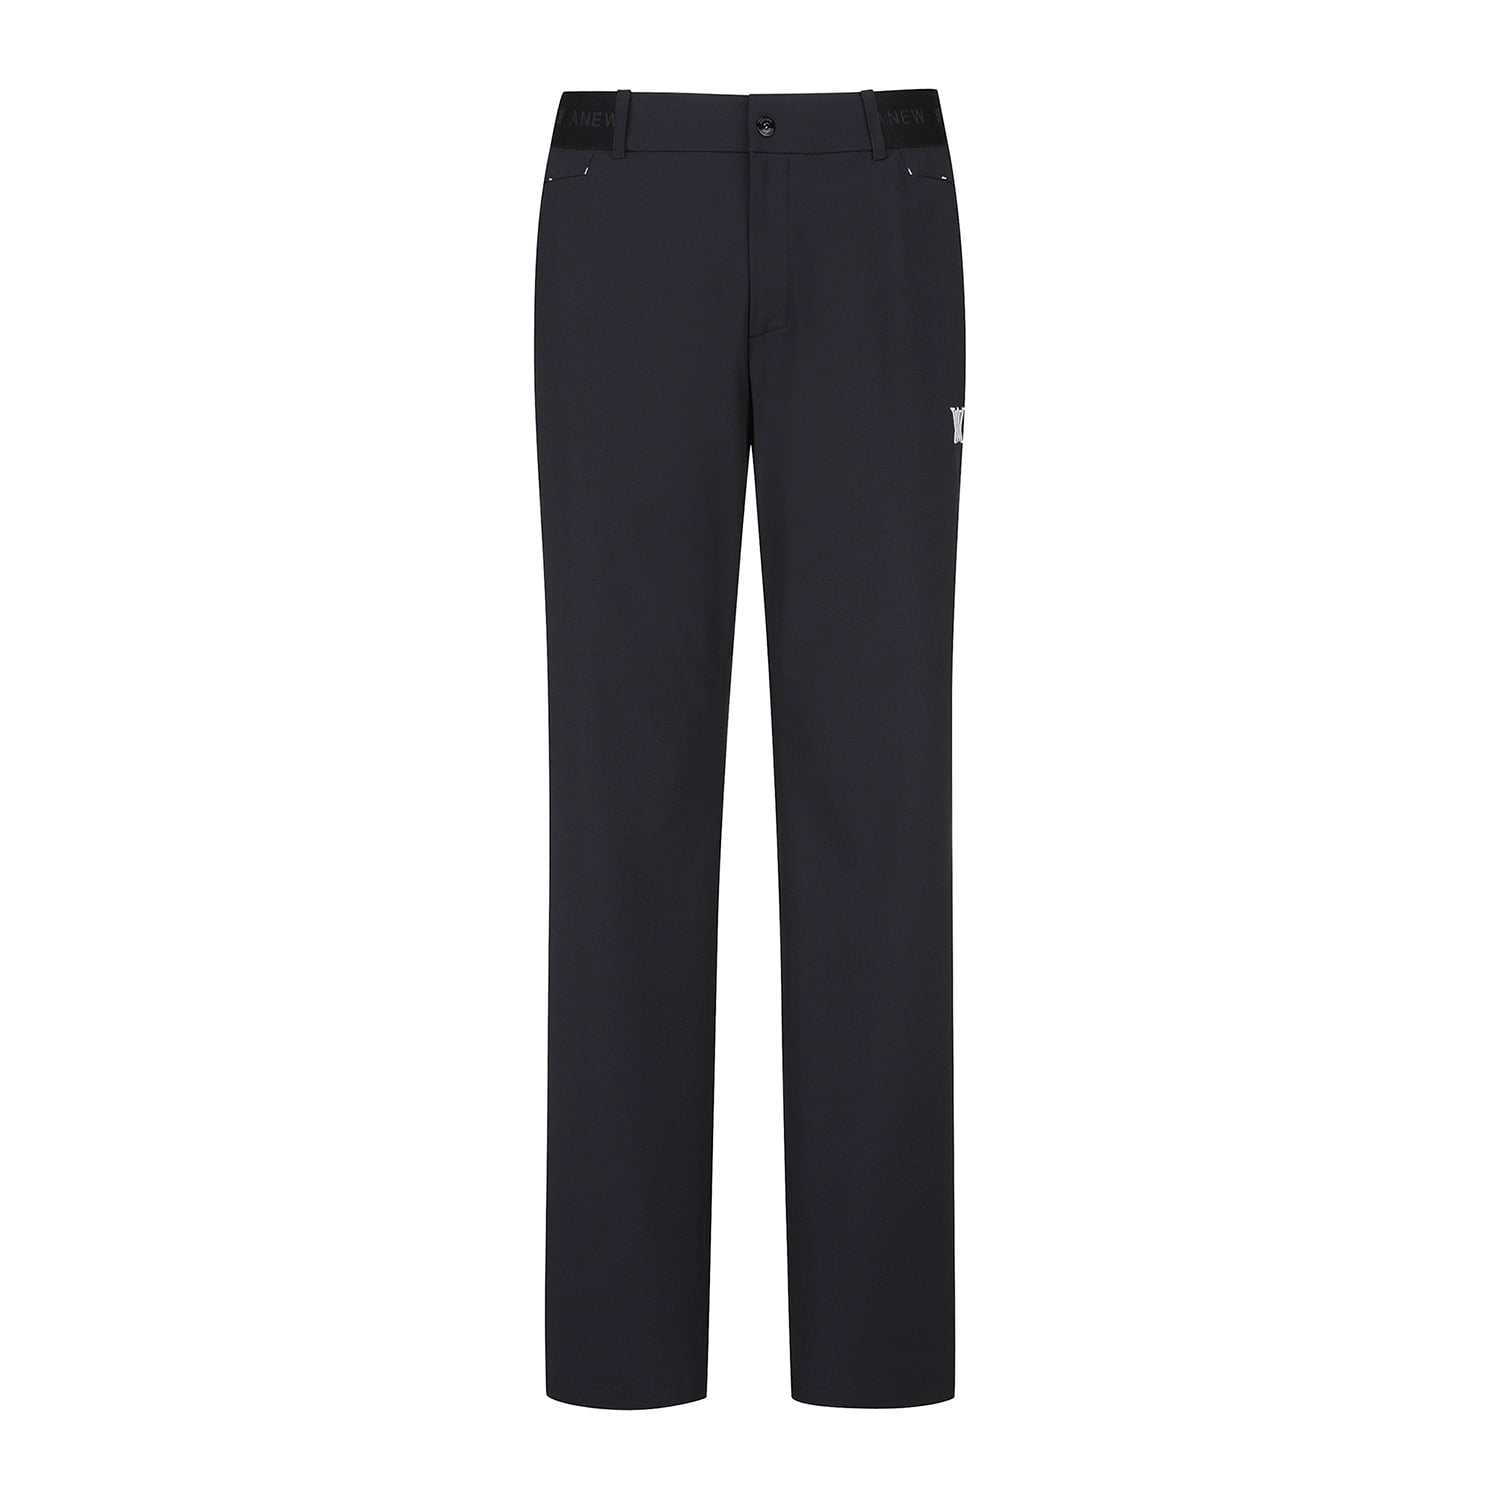 Eco friendly Sportswear Longpants Light Grey - Blush Collection